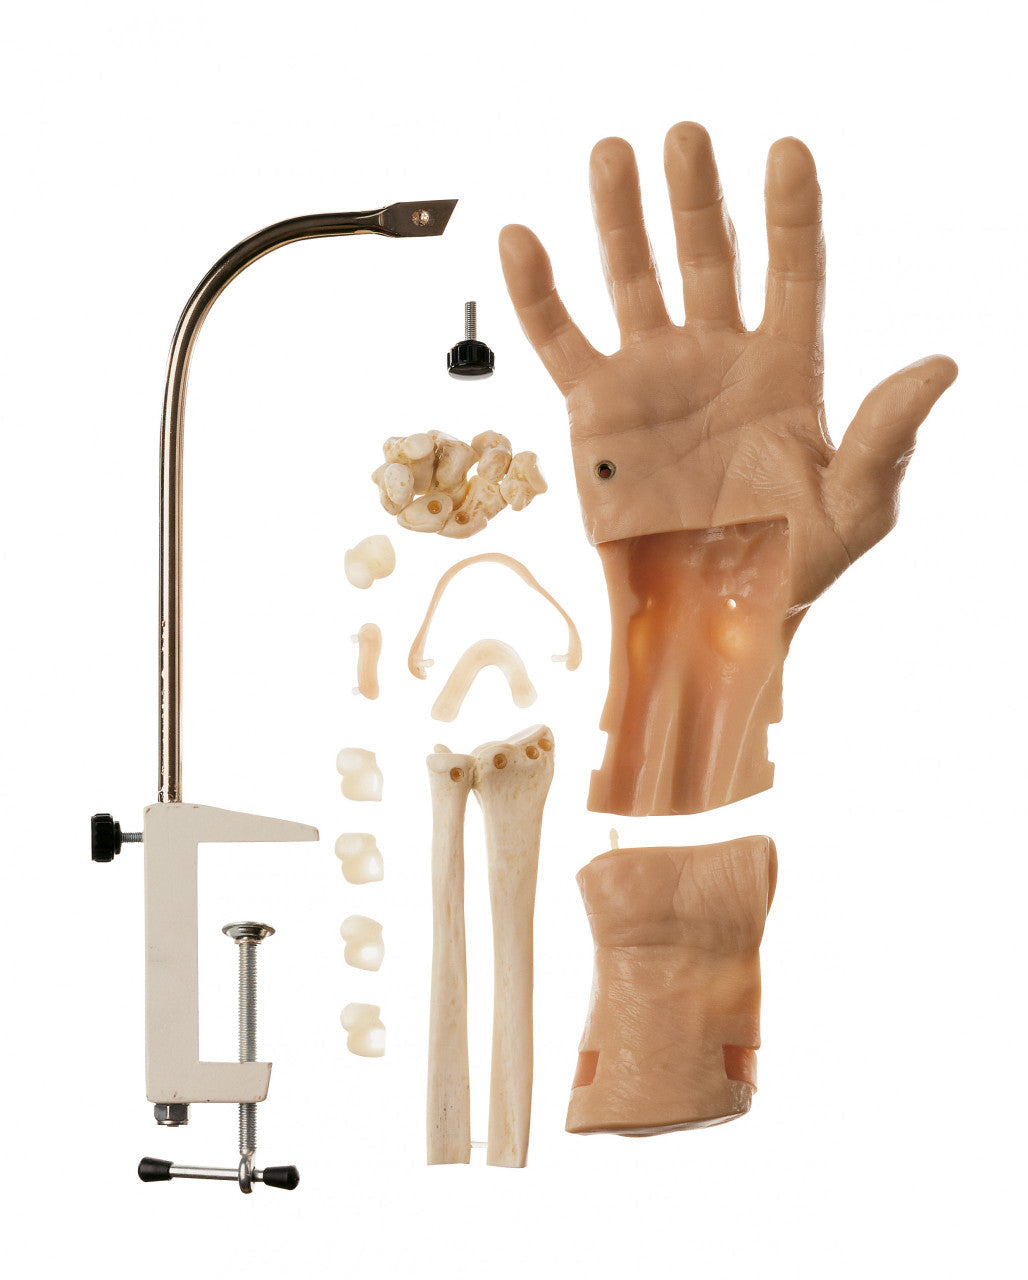 Arthroscopic Model of the Wrist